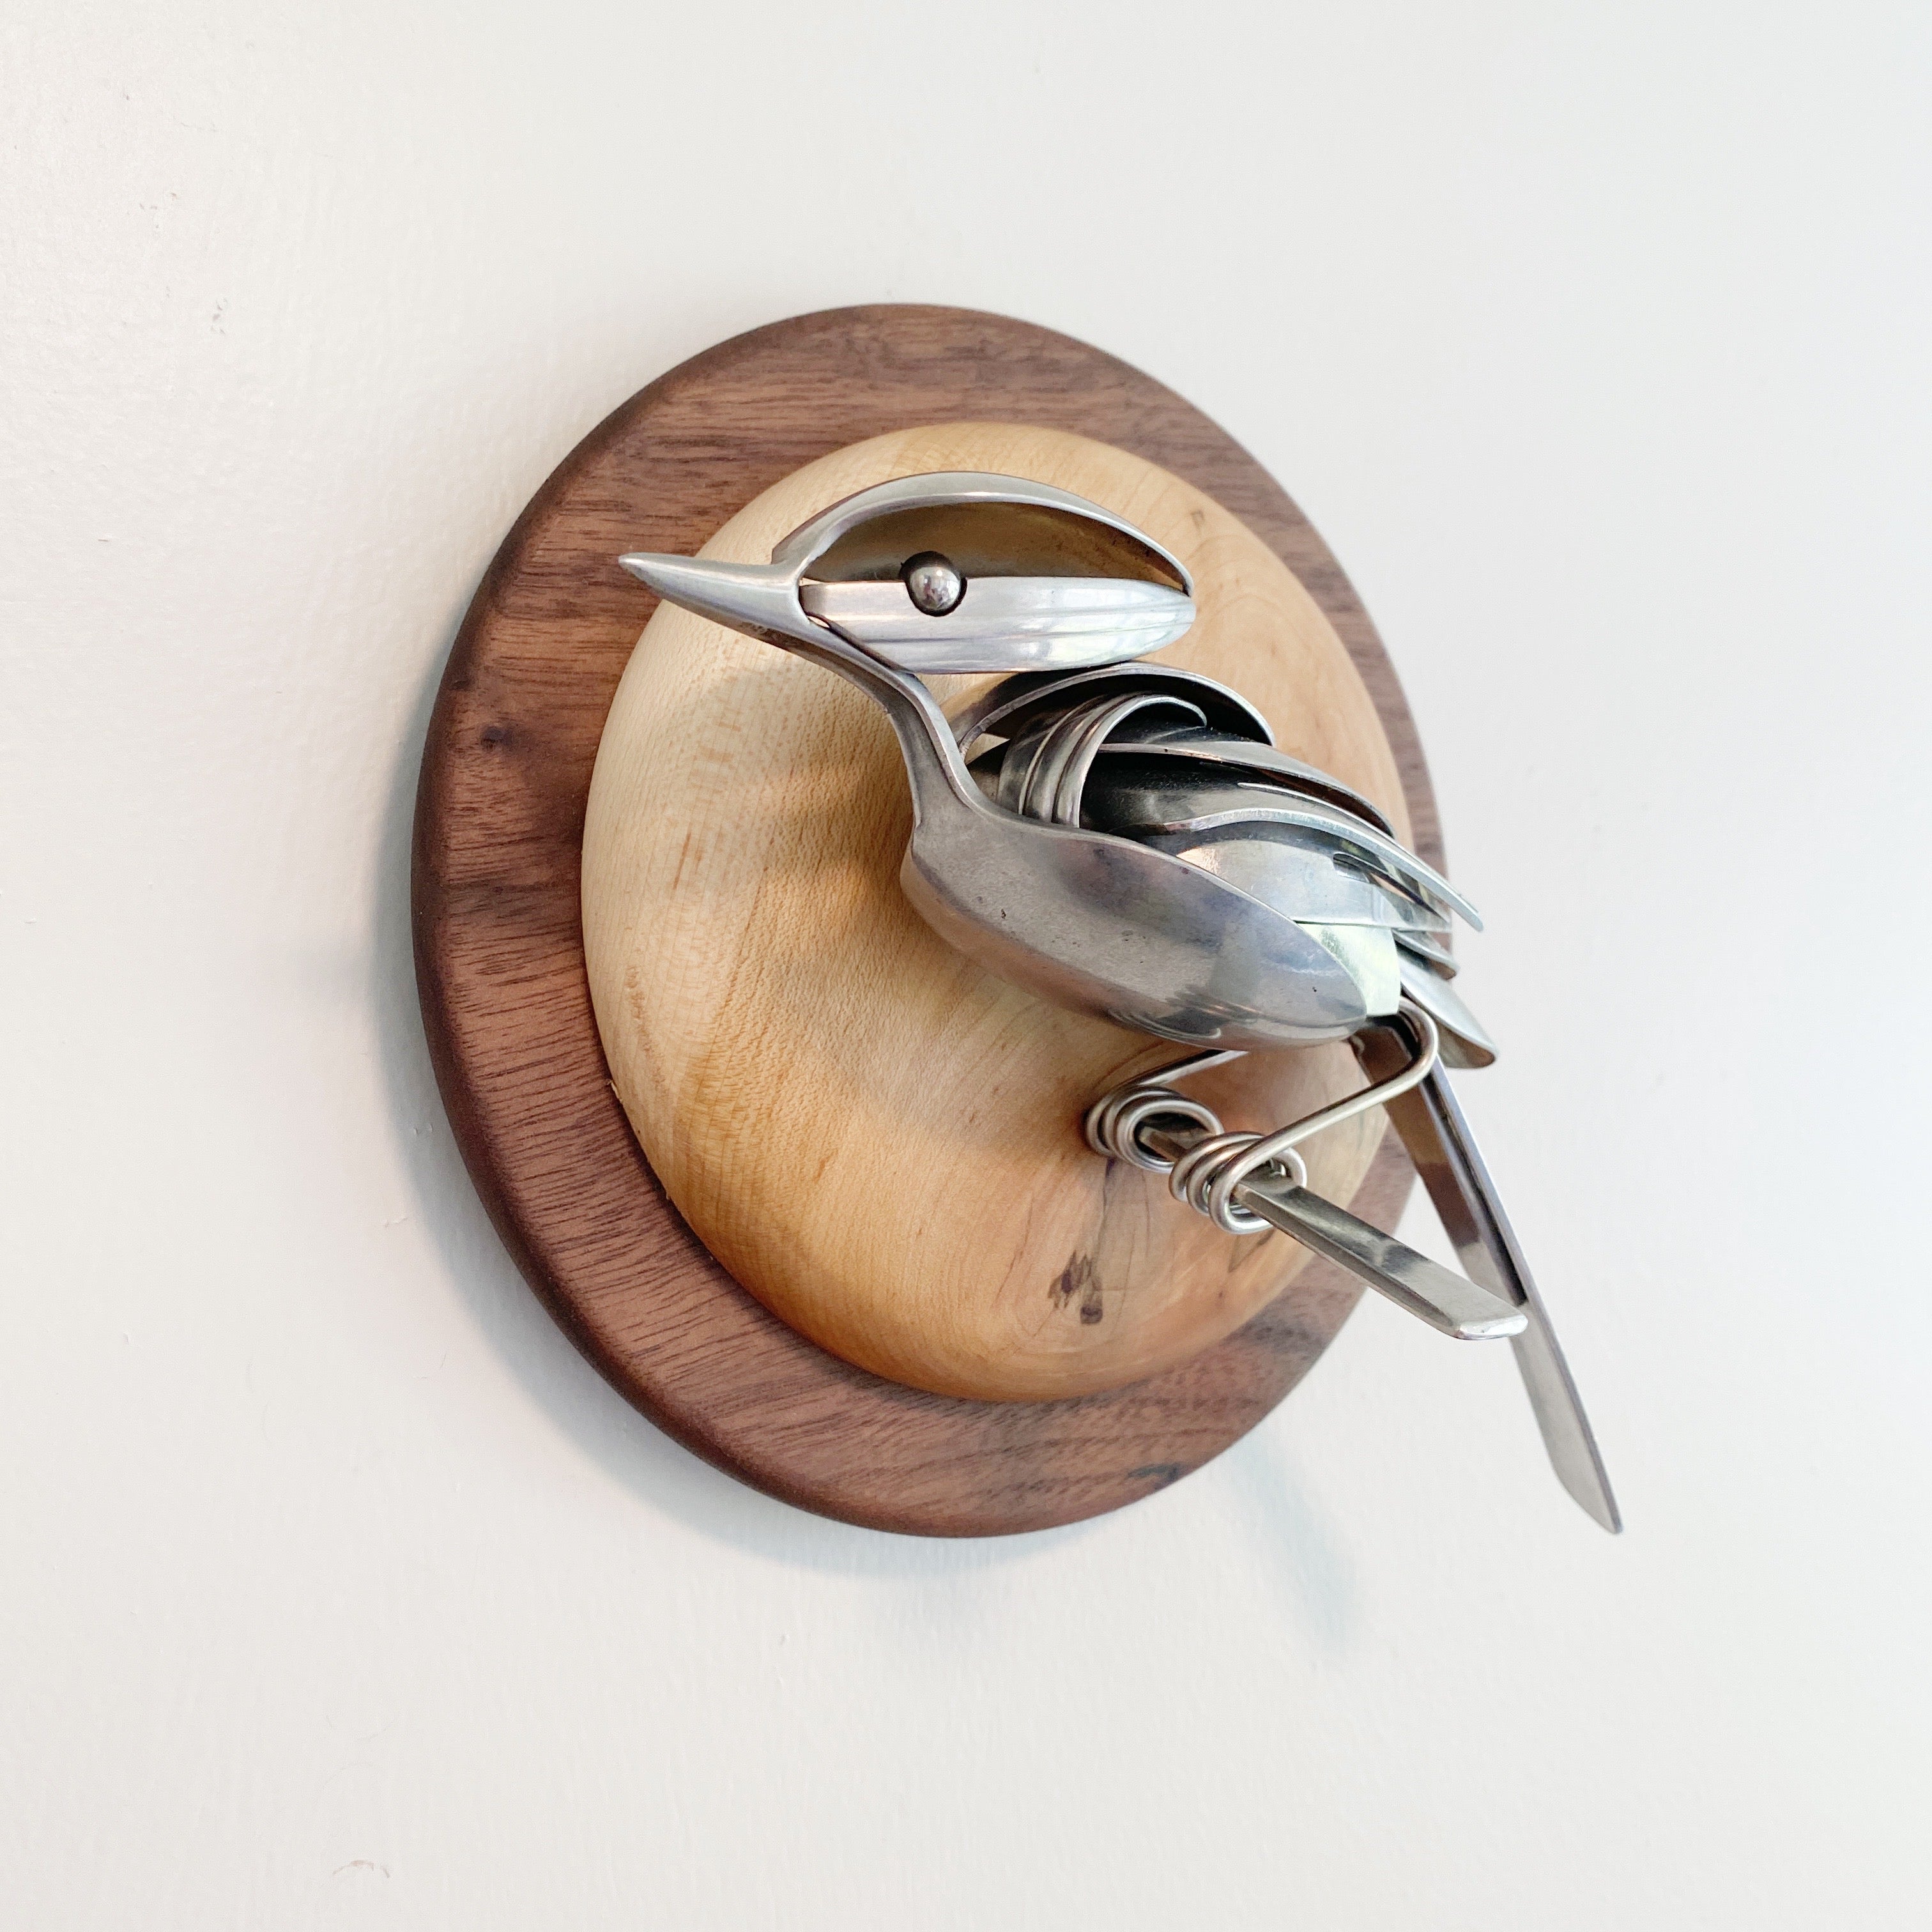 "Weston" - Upcycled Metal Bird Sculpture